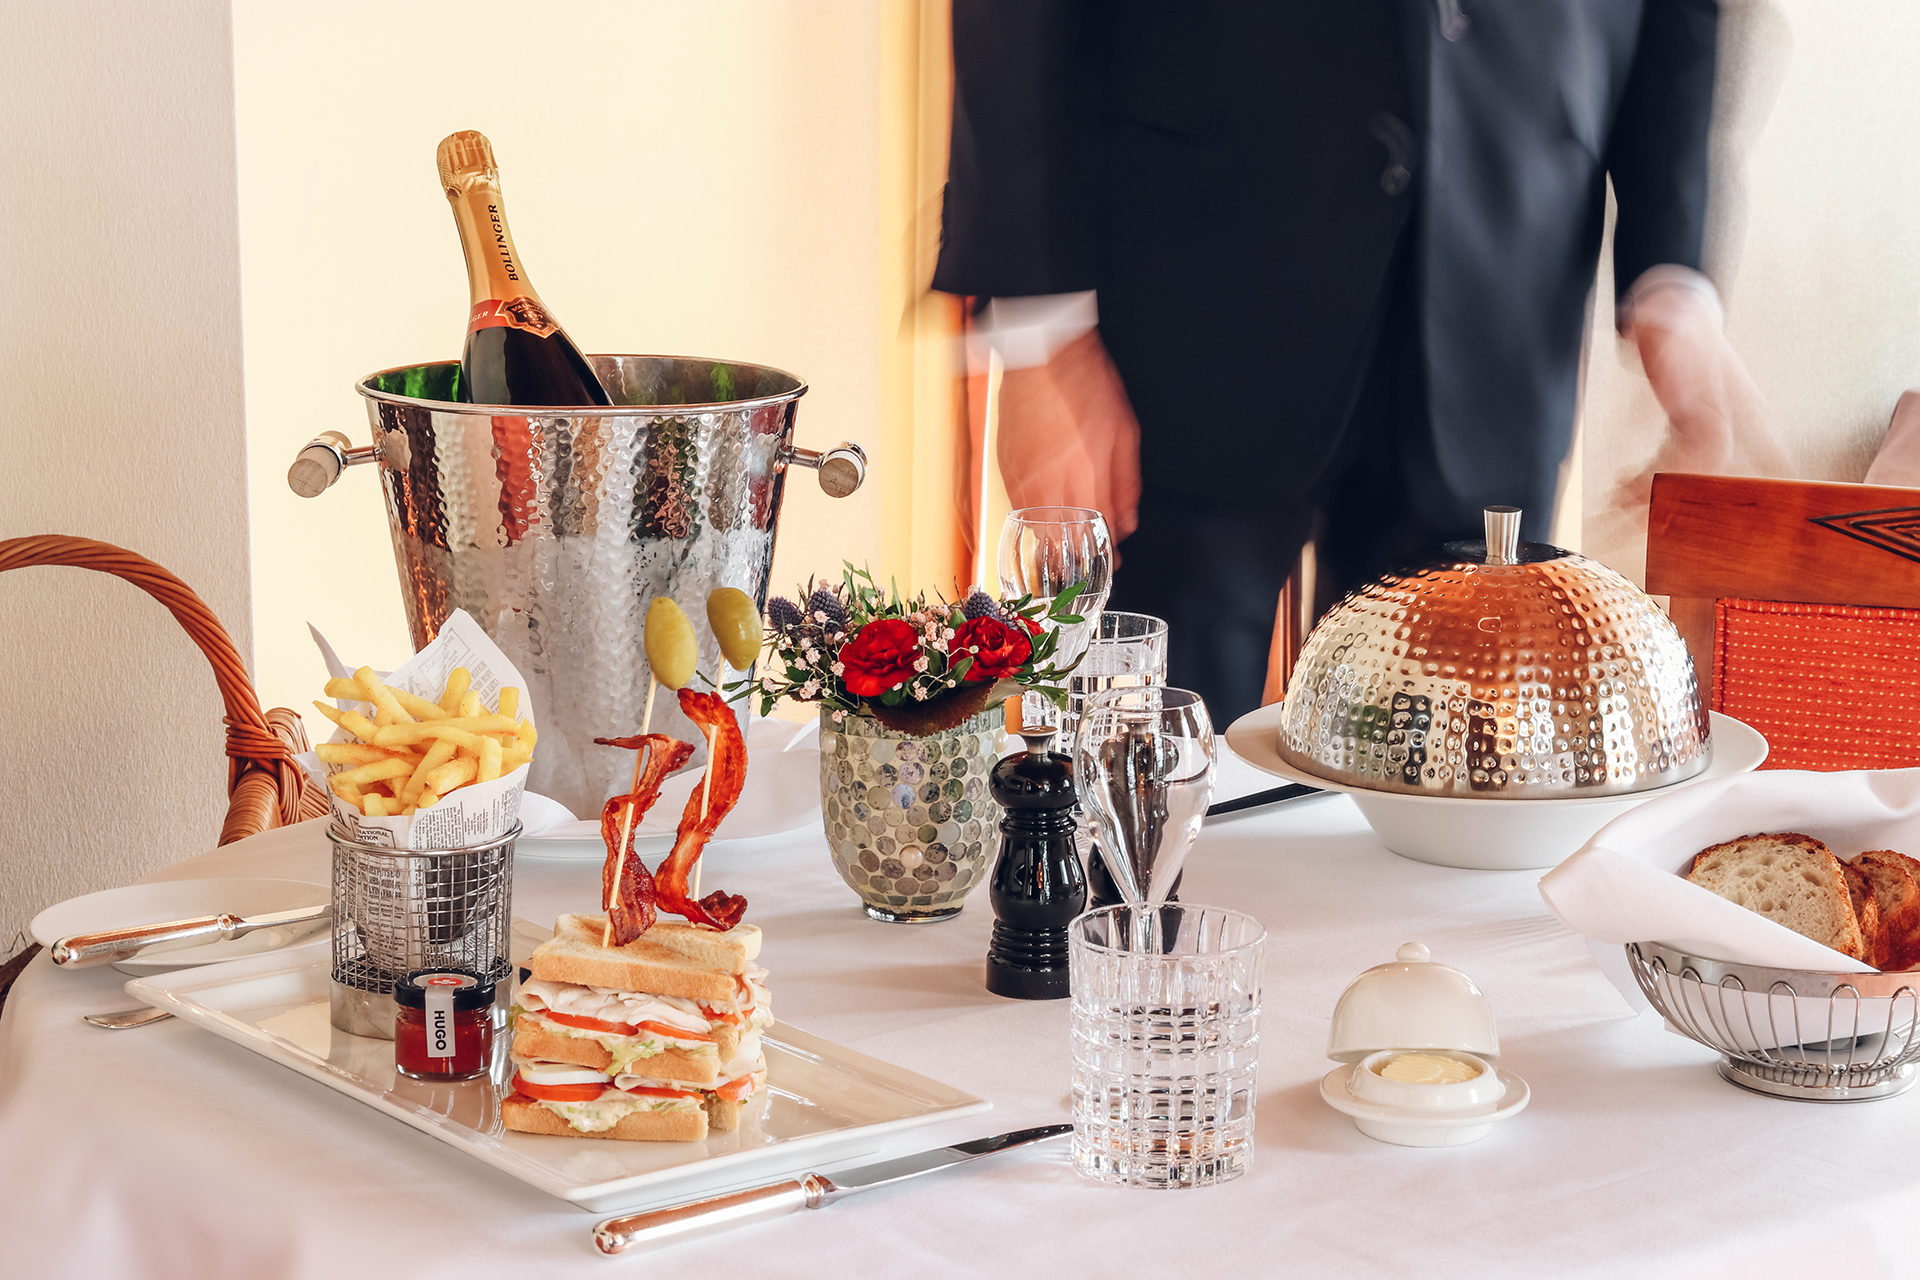 Room Service at Grand Hotel Zermatterhof - French Fries